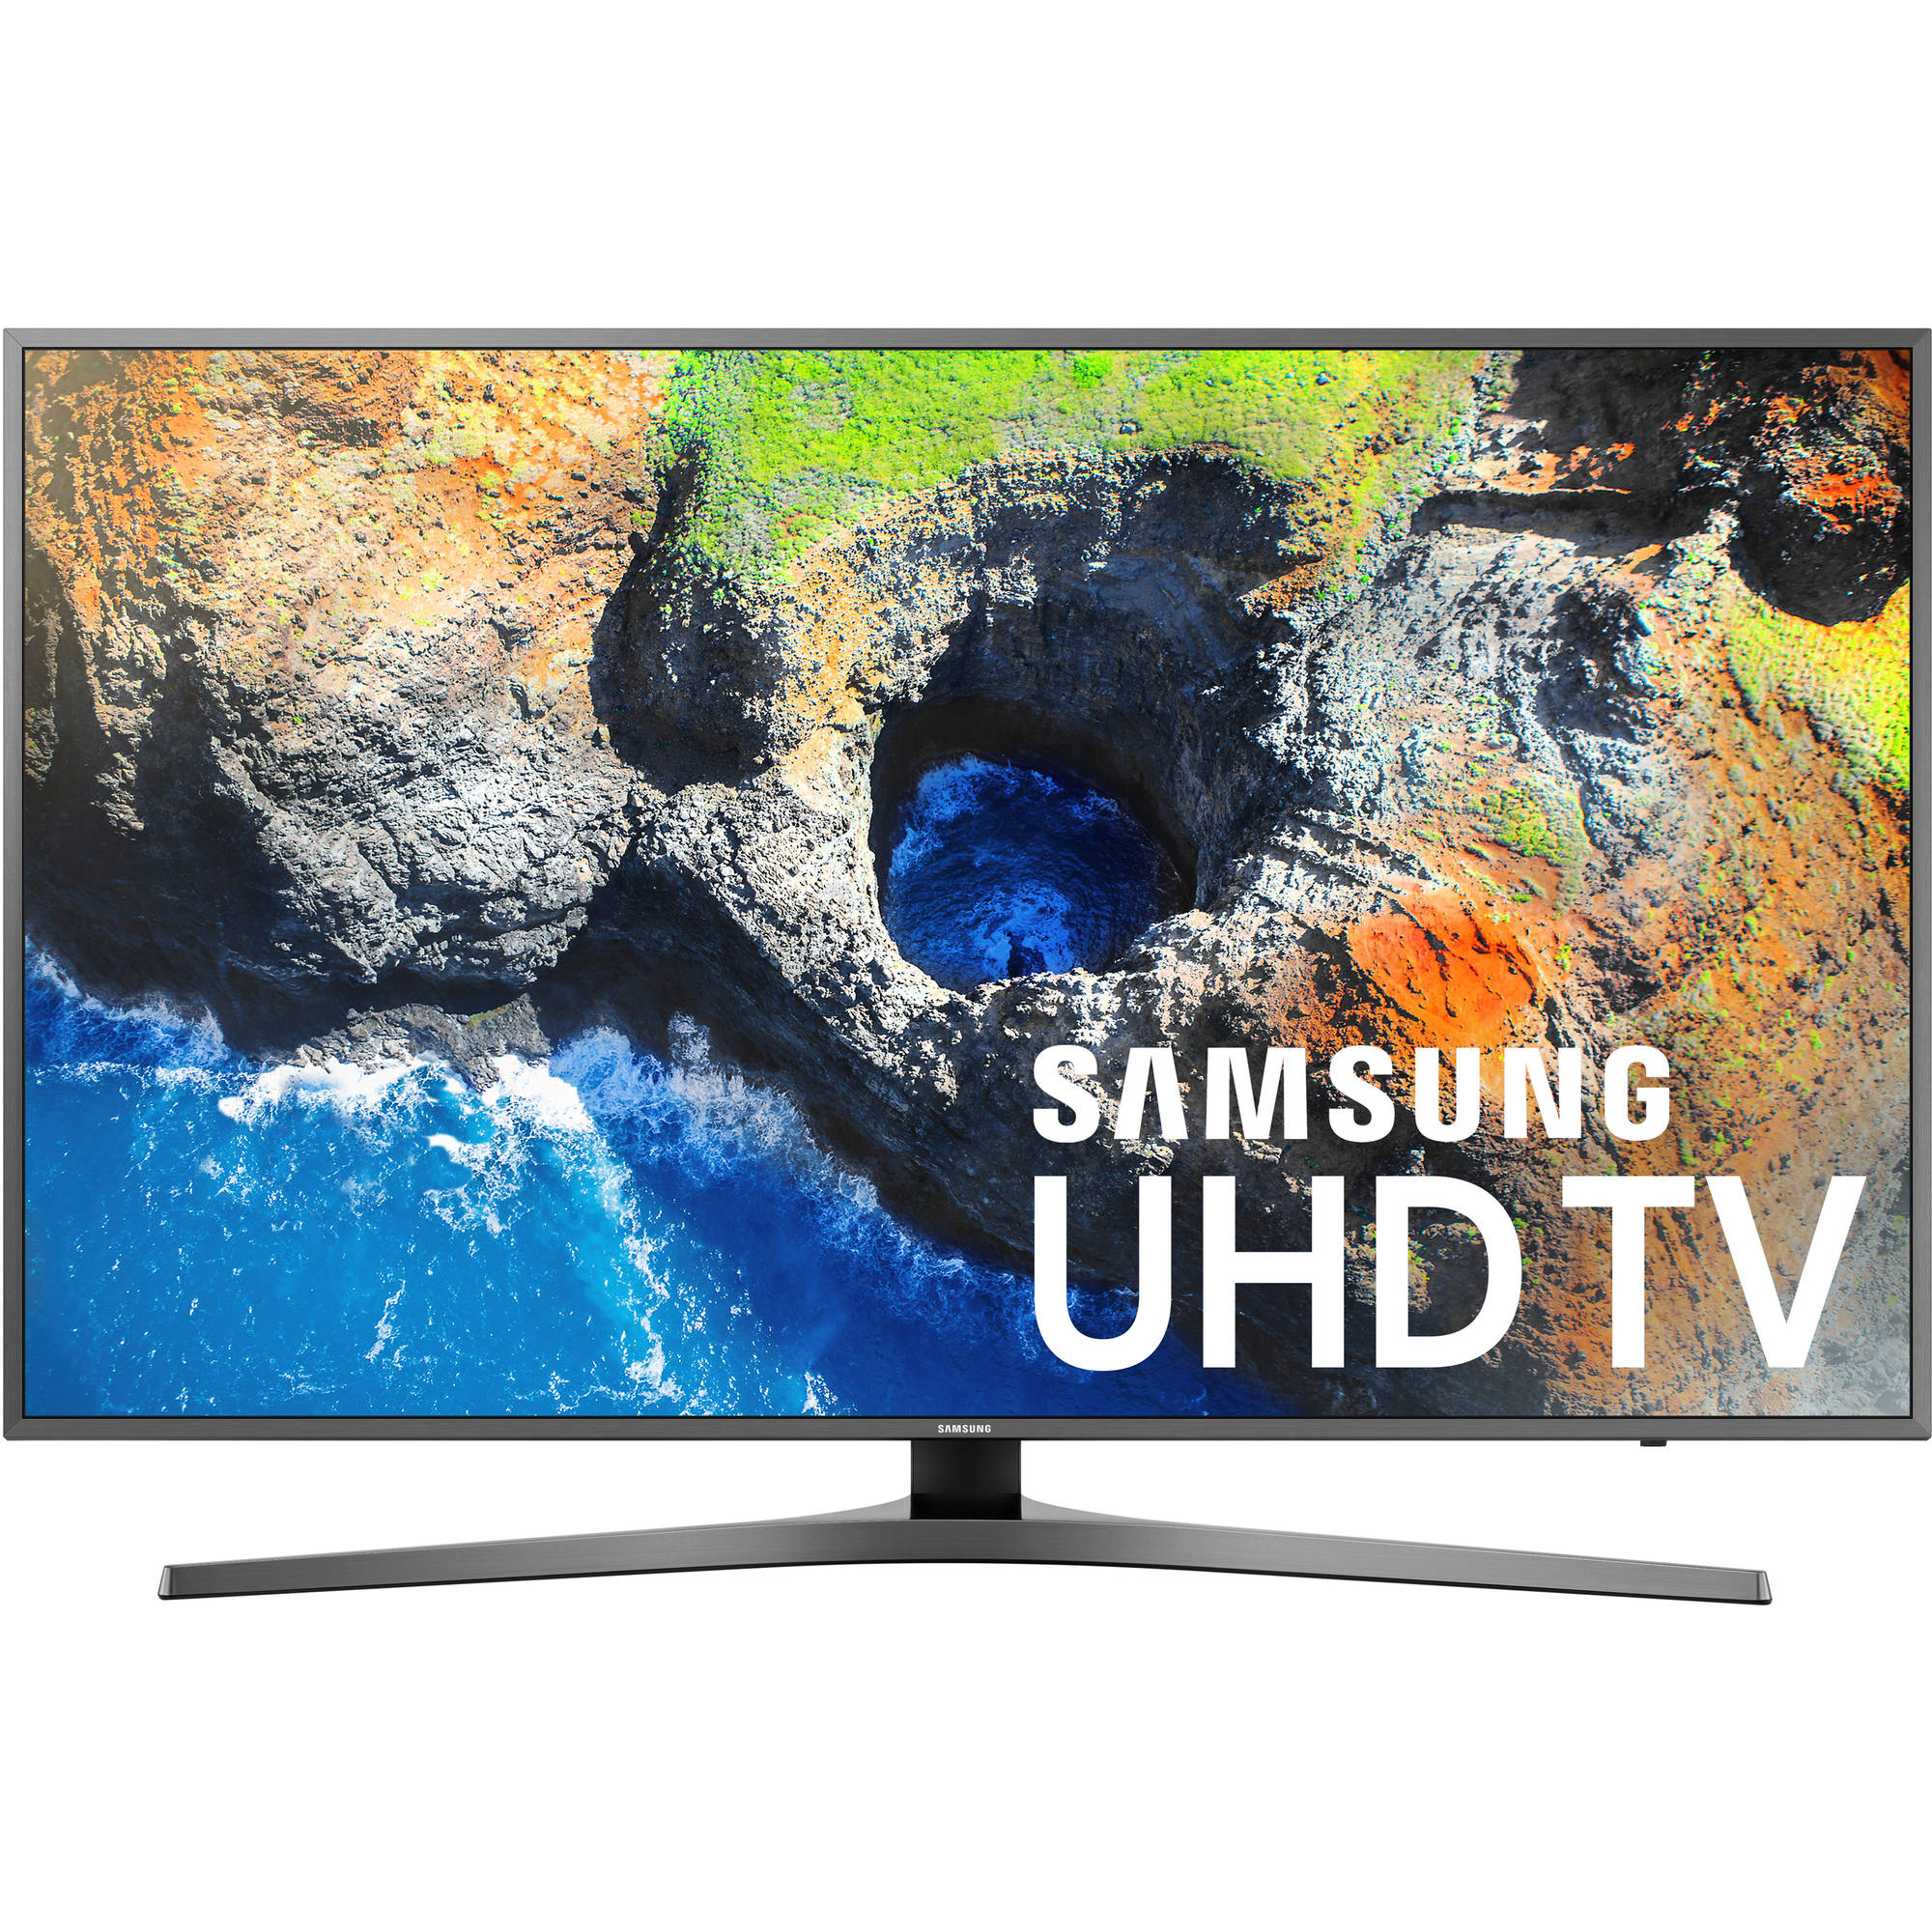 Samsung 49" Class 4K (2160P) Ultra HD Smart LED TV (UN49MU7000FXZA) - image 1 of 15